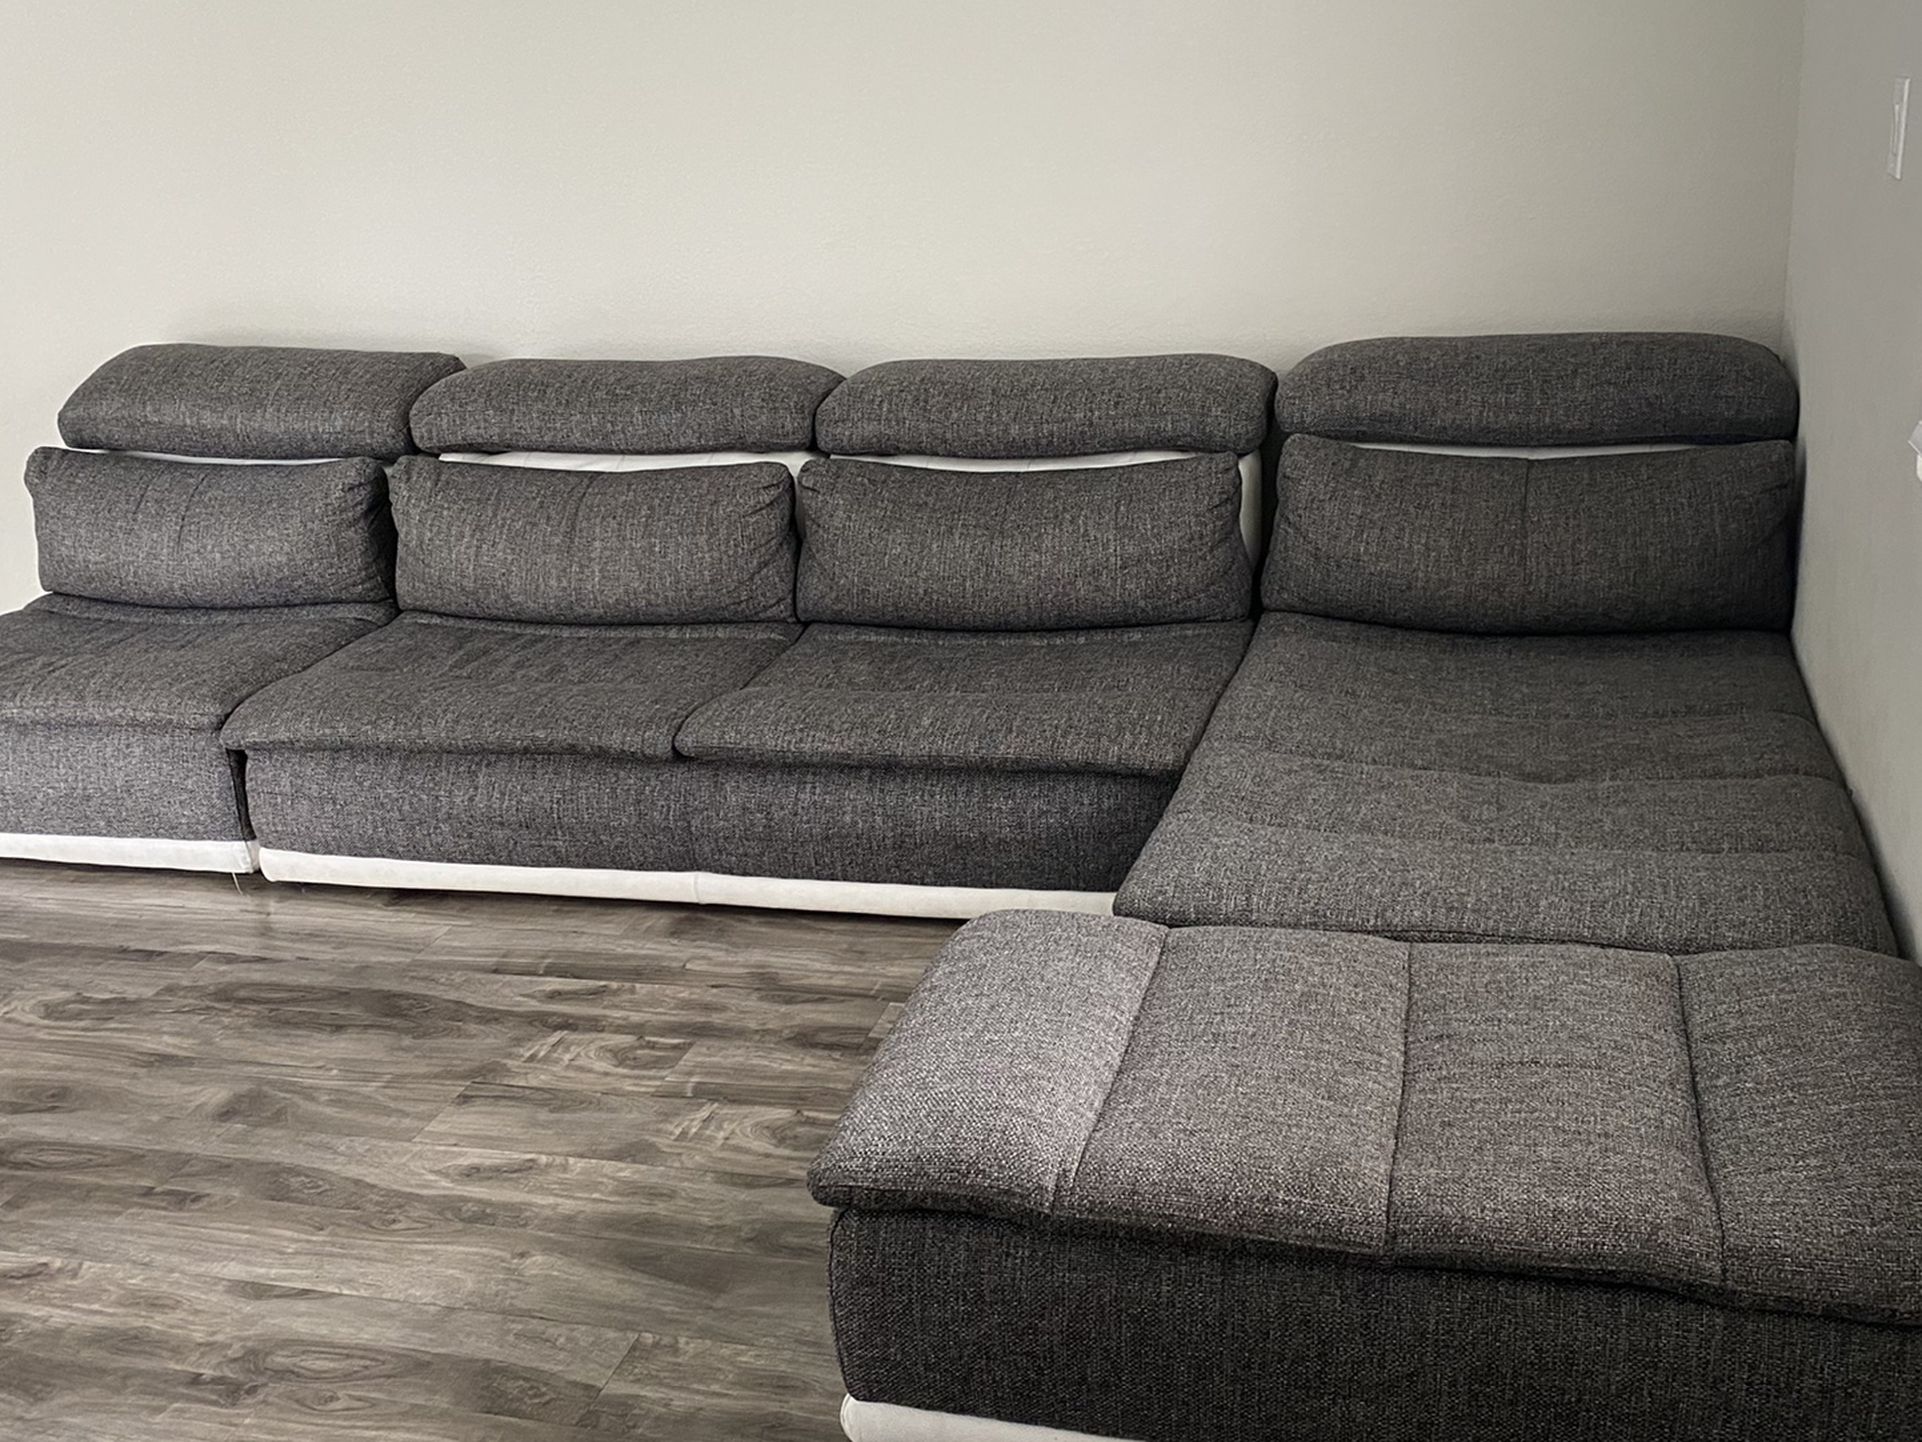 David Ferrari Panorama Italian Modern Grey Fabric & White Leather Sectional Sofa made in italy MADE IN ITALY